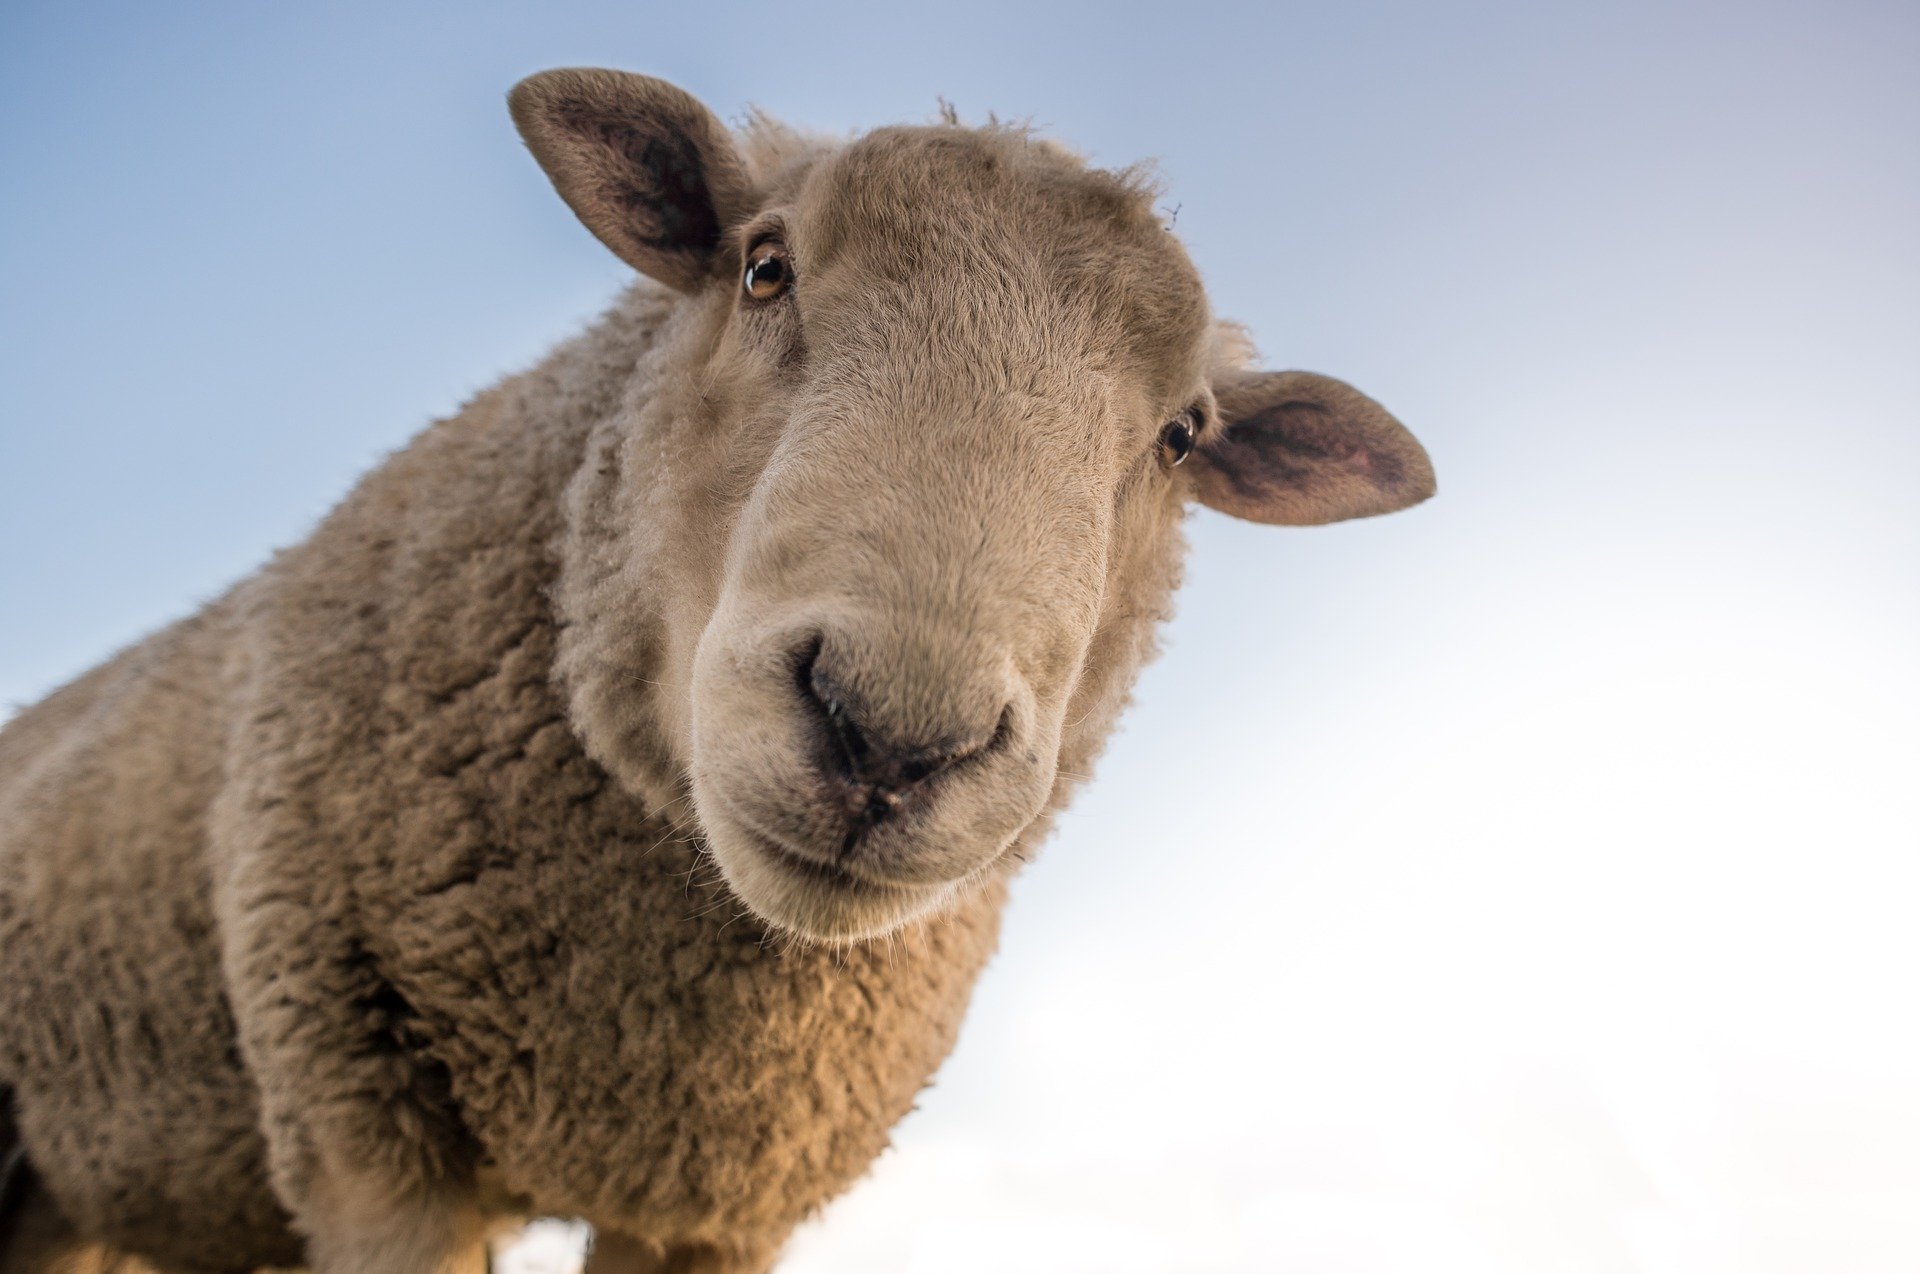 A photo of a sheep looking down at the camera